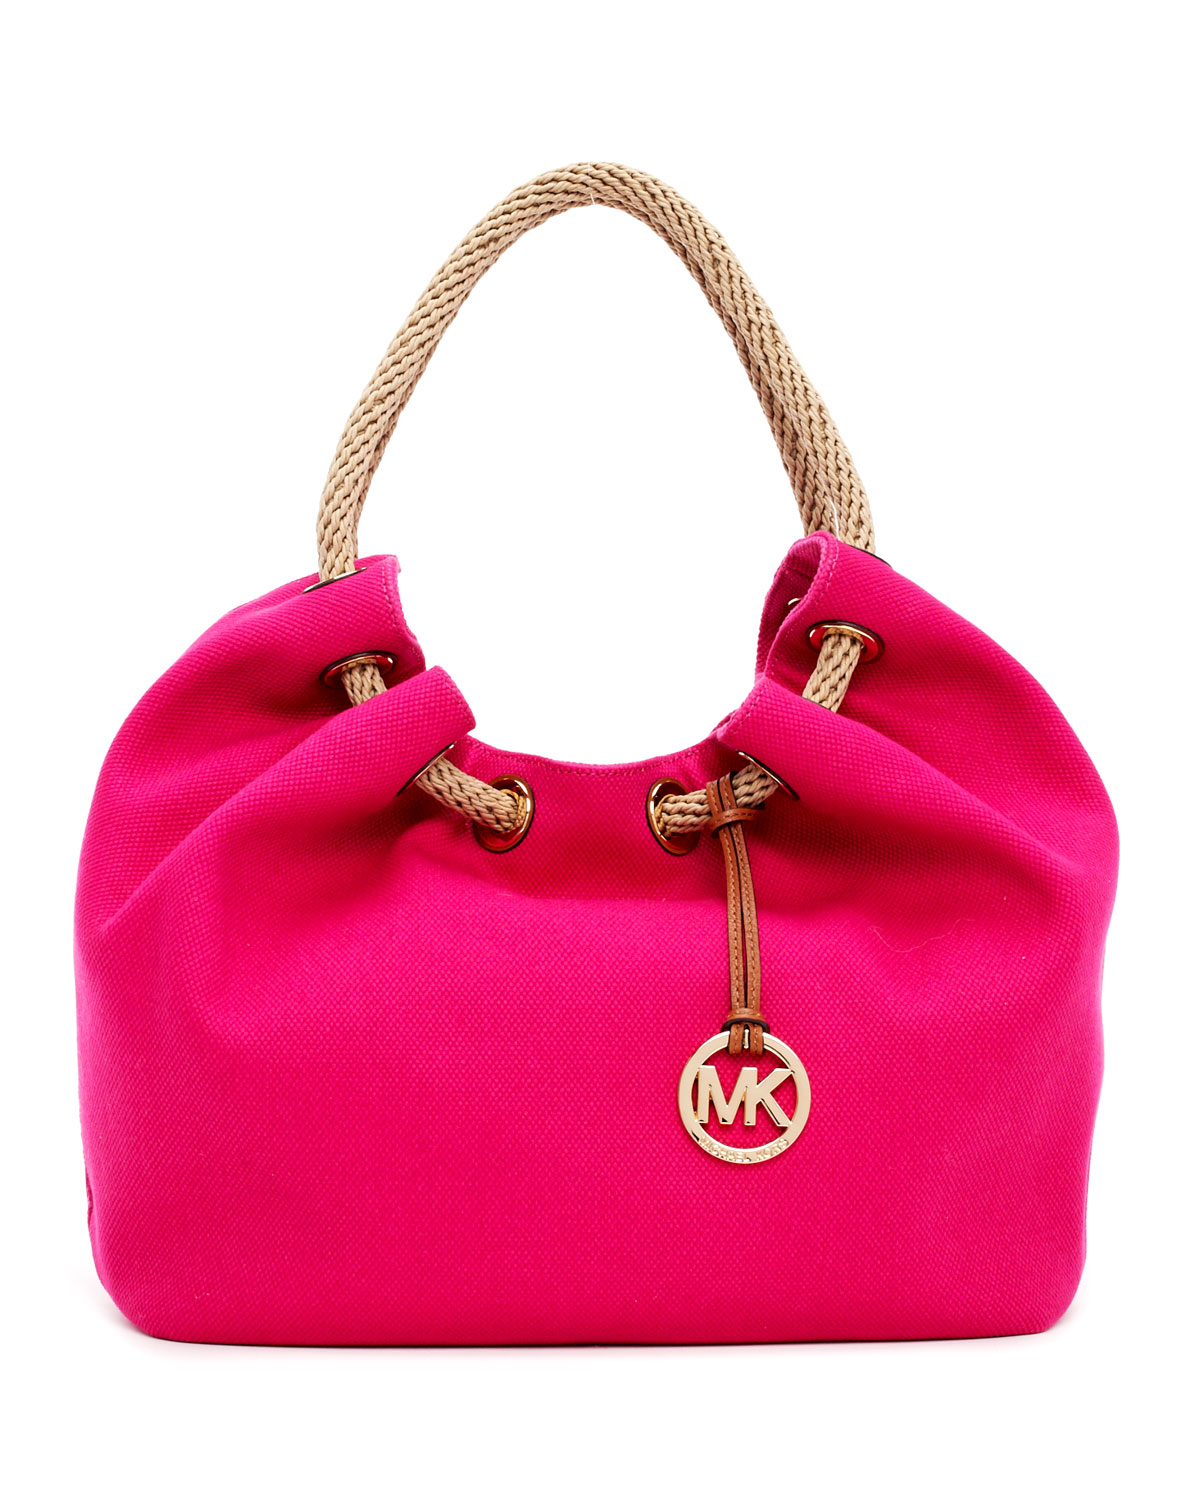 Michael Kors Canvas Tote Handbags | NAR Media Kit